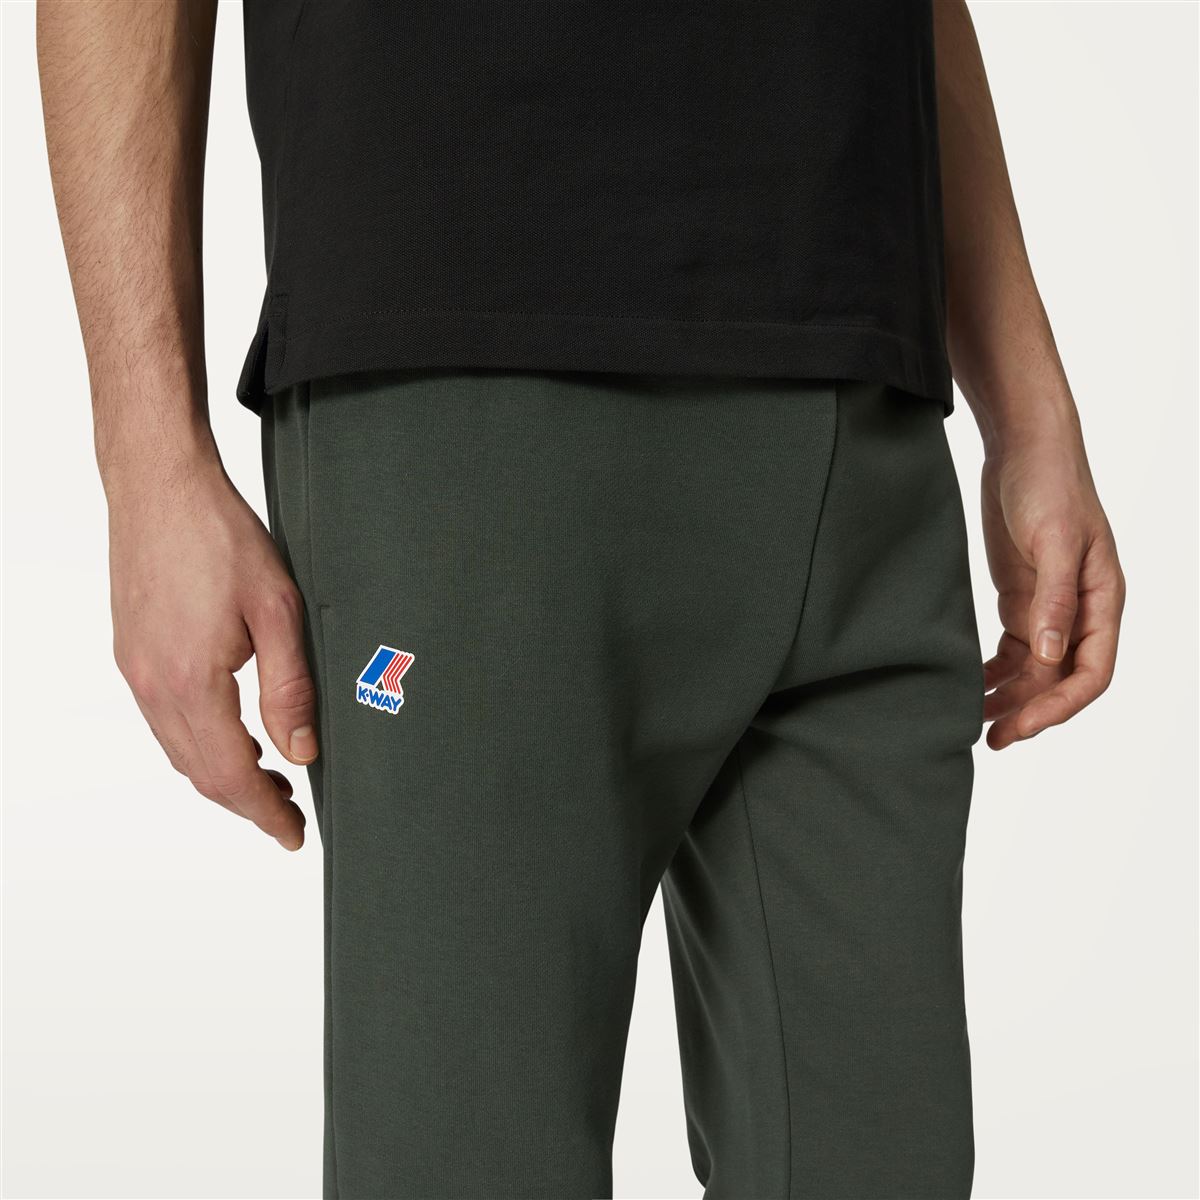 LE VRAI BISHOP POLY COTTON - Pants - Sport Trousers - Unisex - GREEN BLACKISH